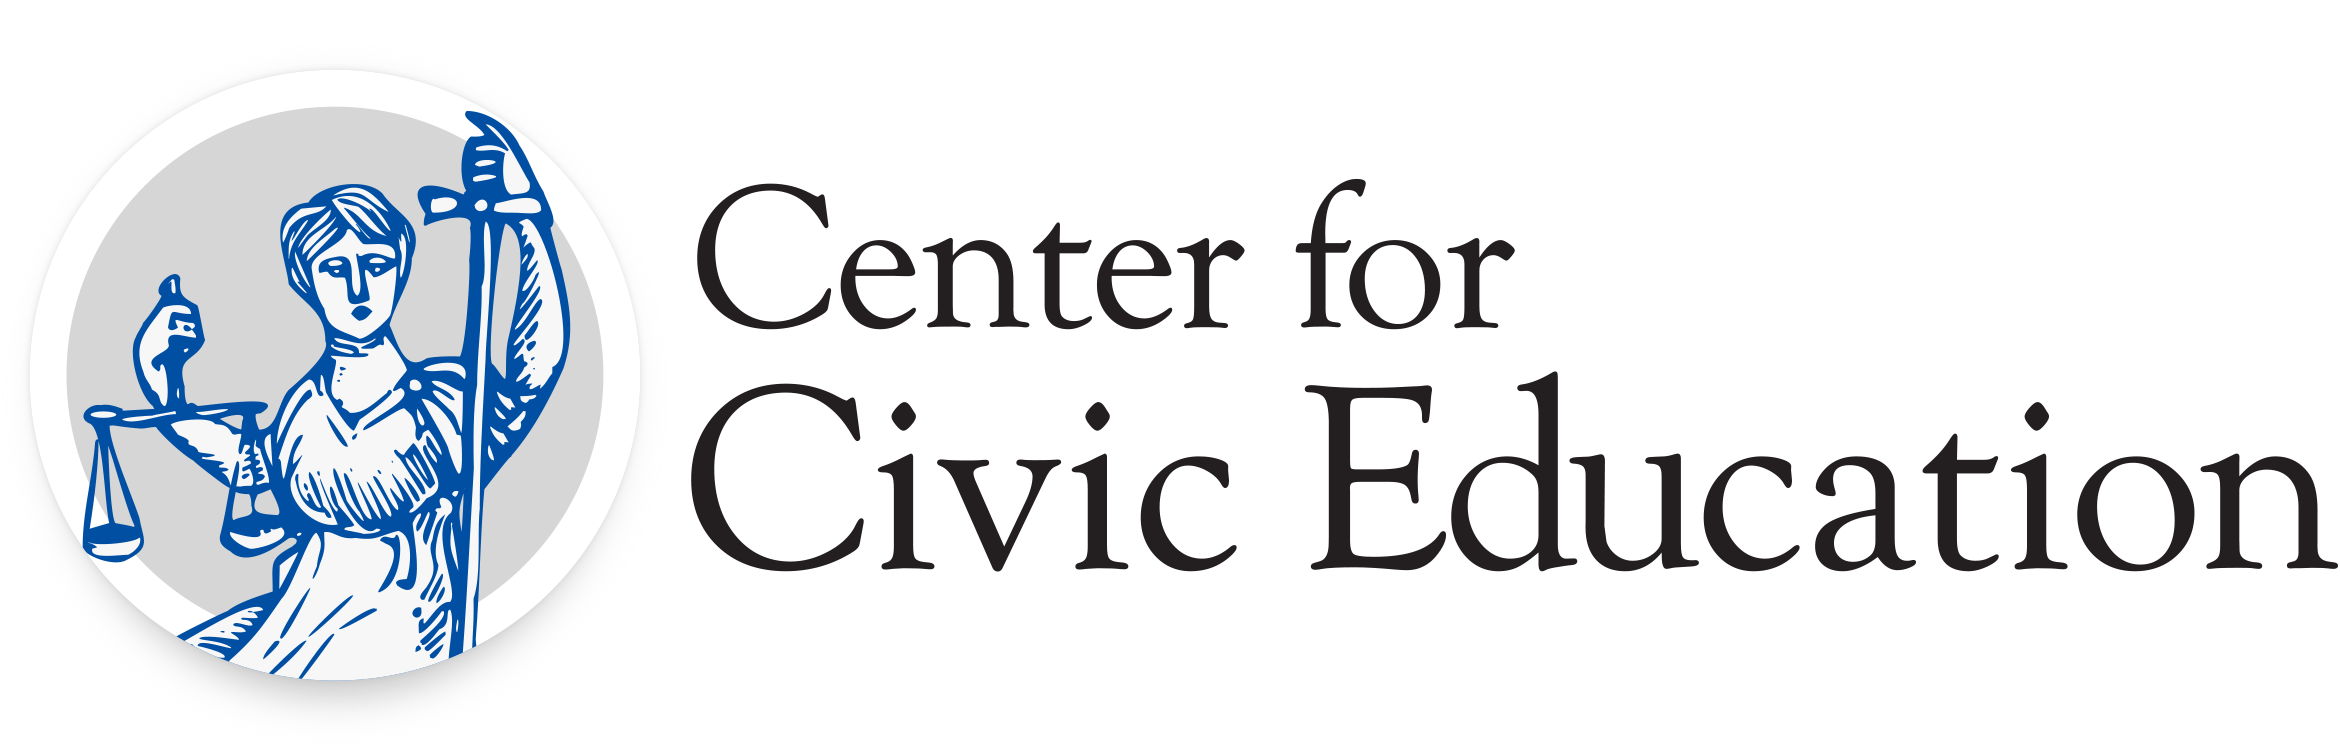 Center for Civic Education Logo